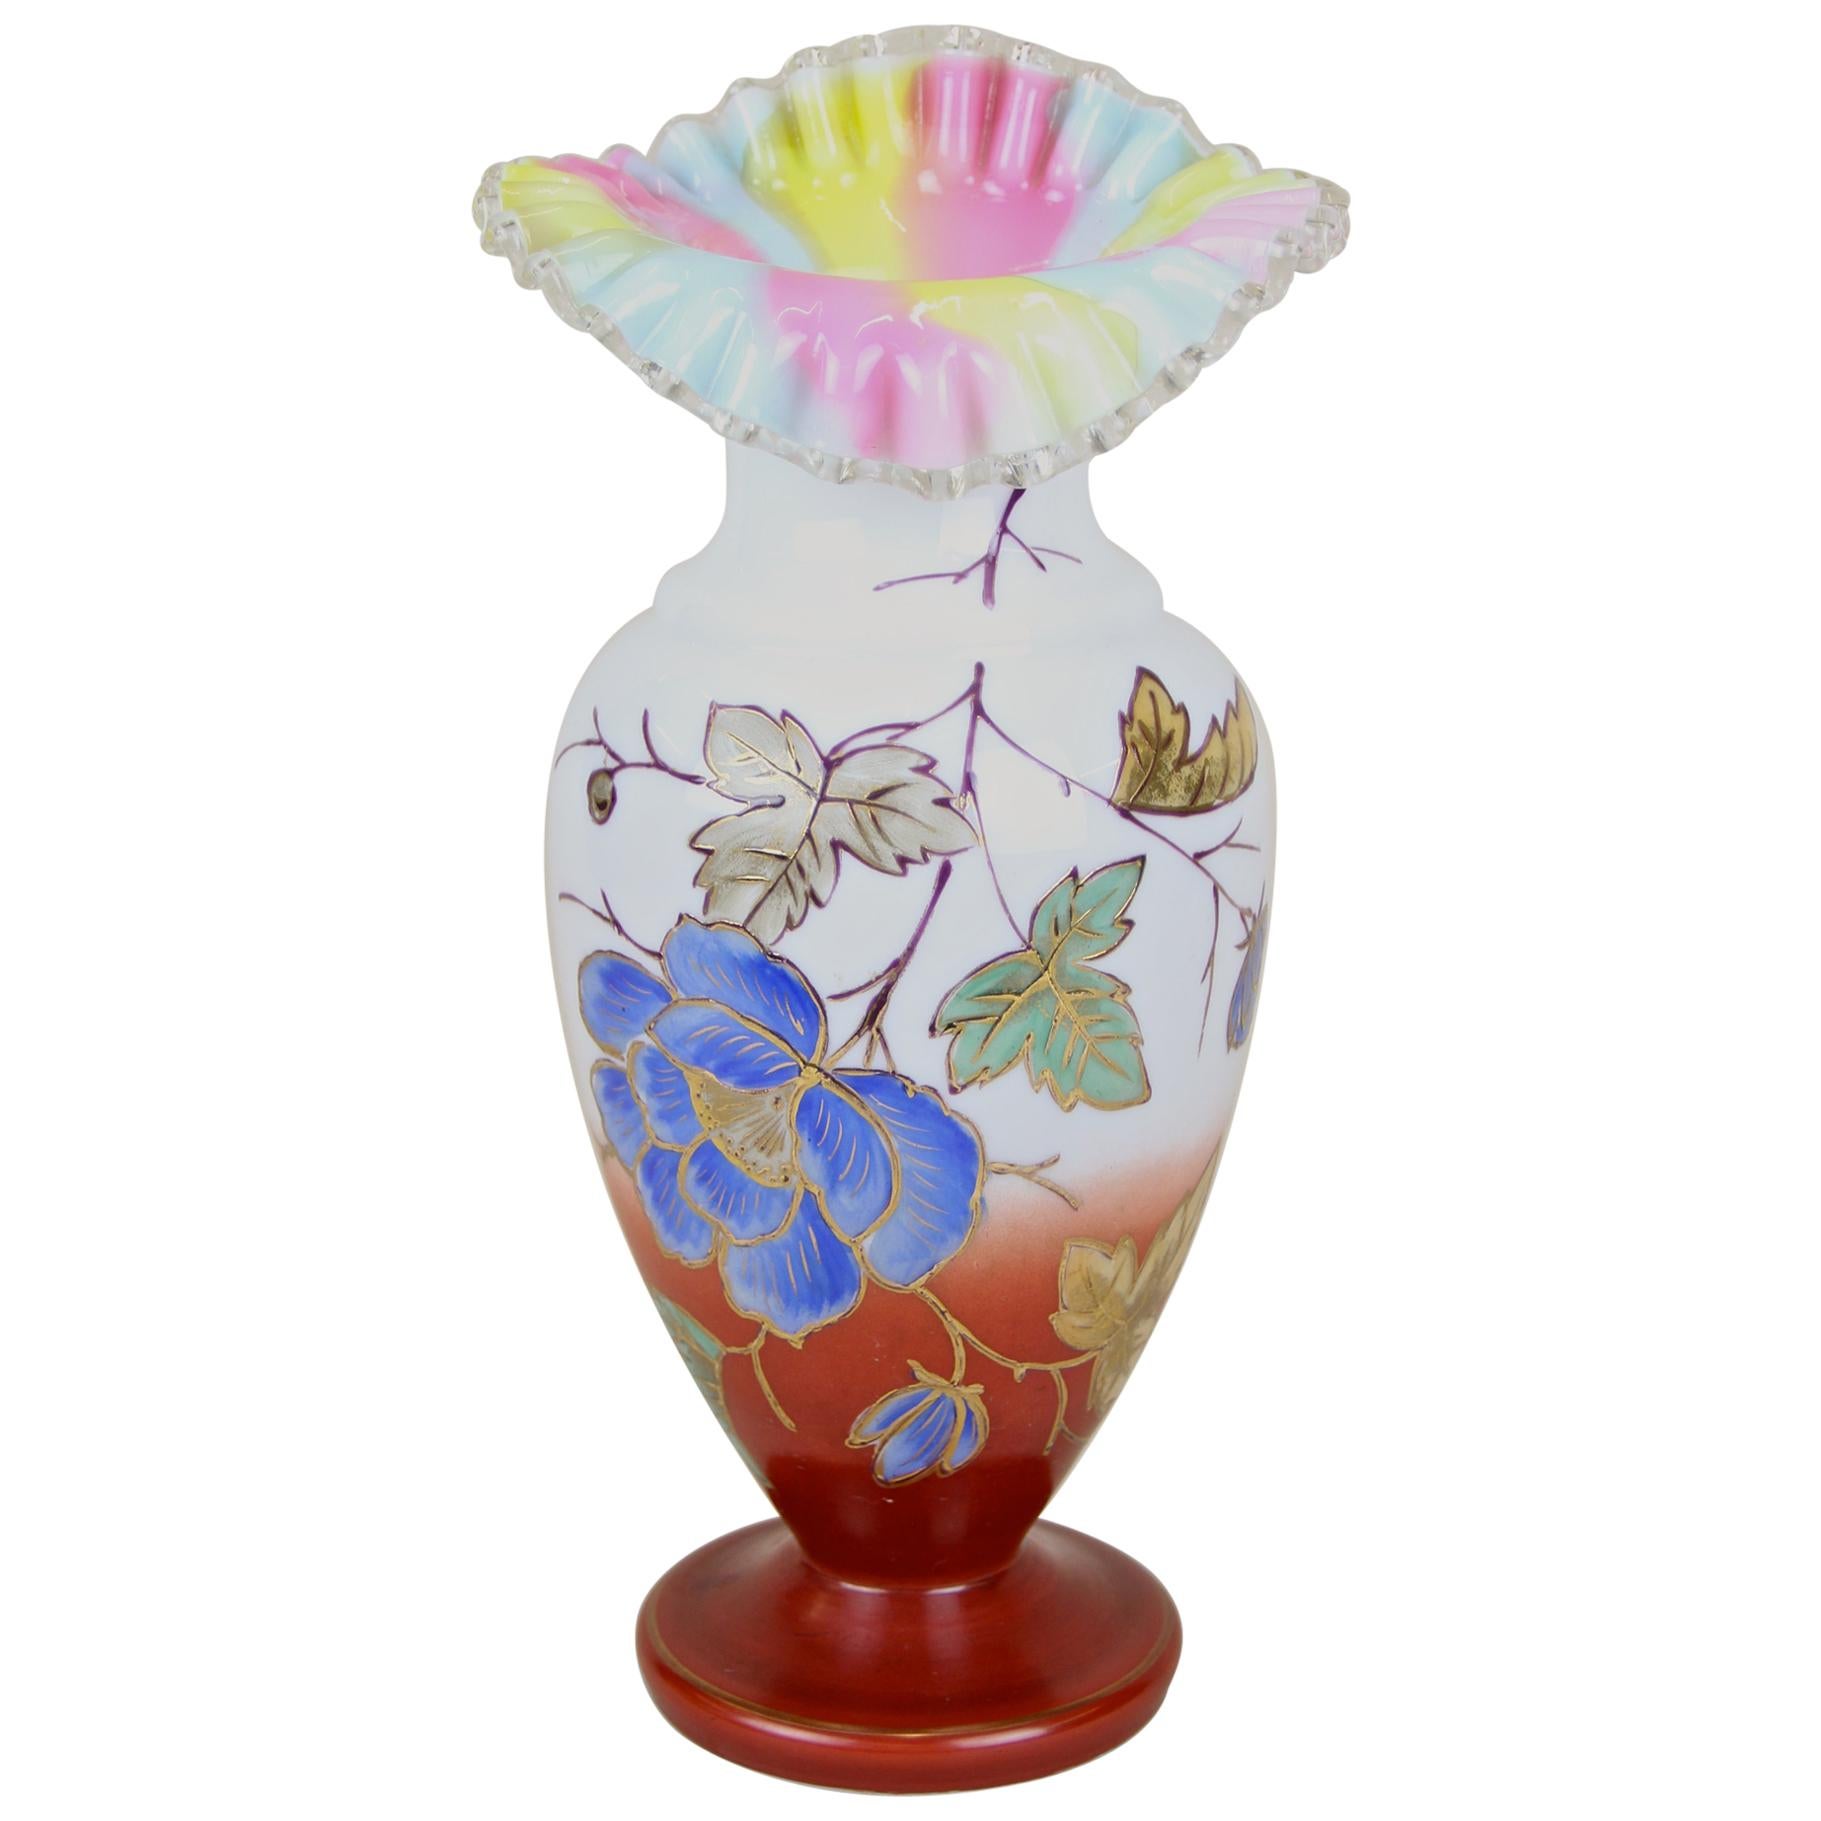 Art Nouveau Frilly Glass Vase with Enamel Paintings, Austria, circa 1900